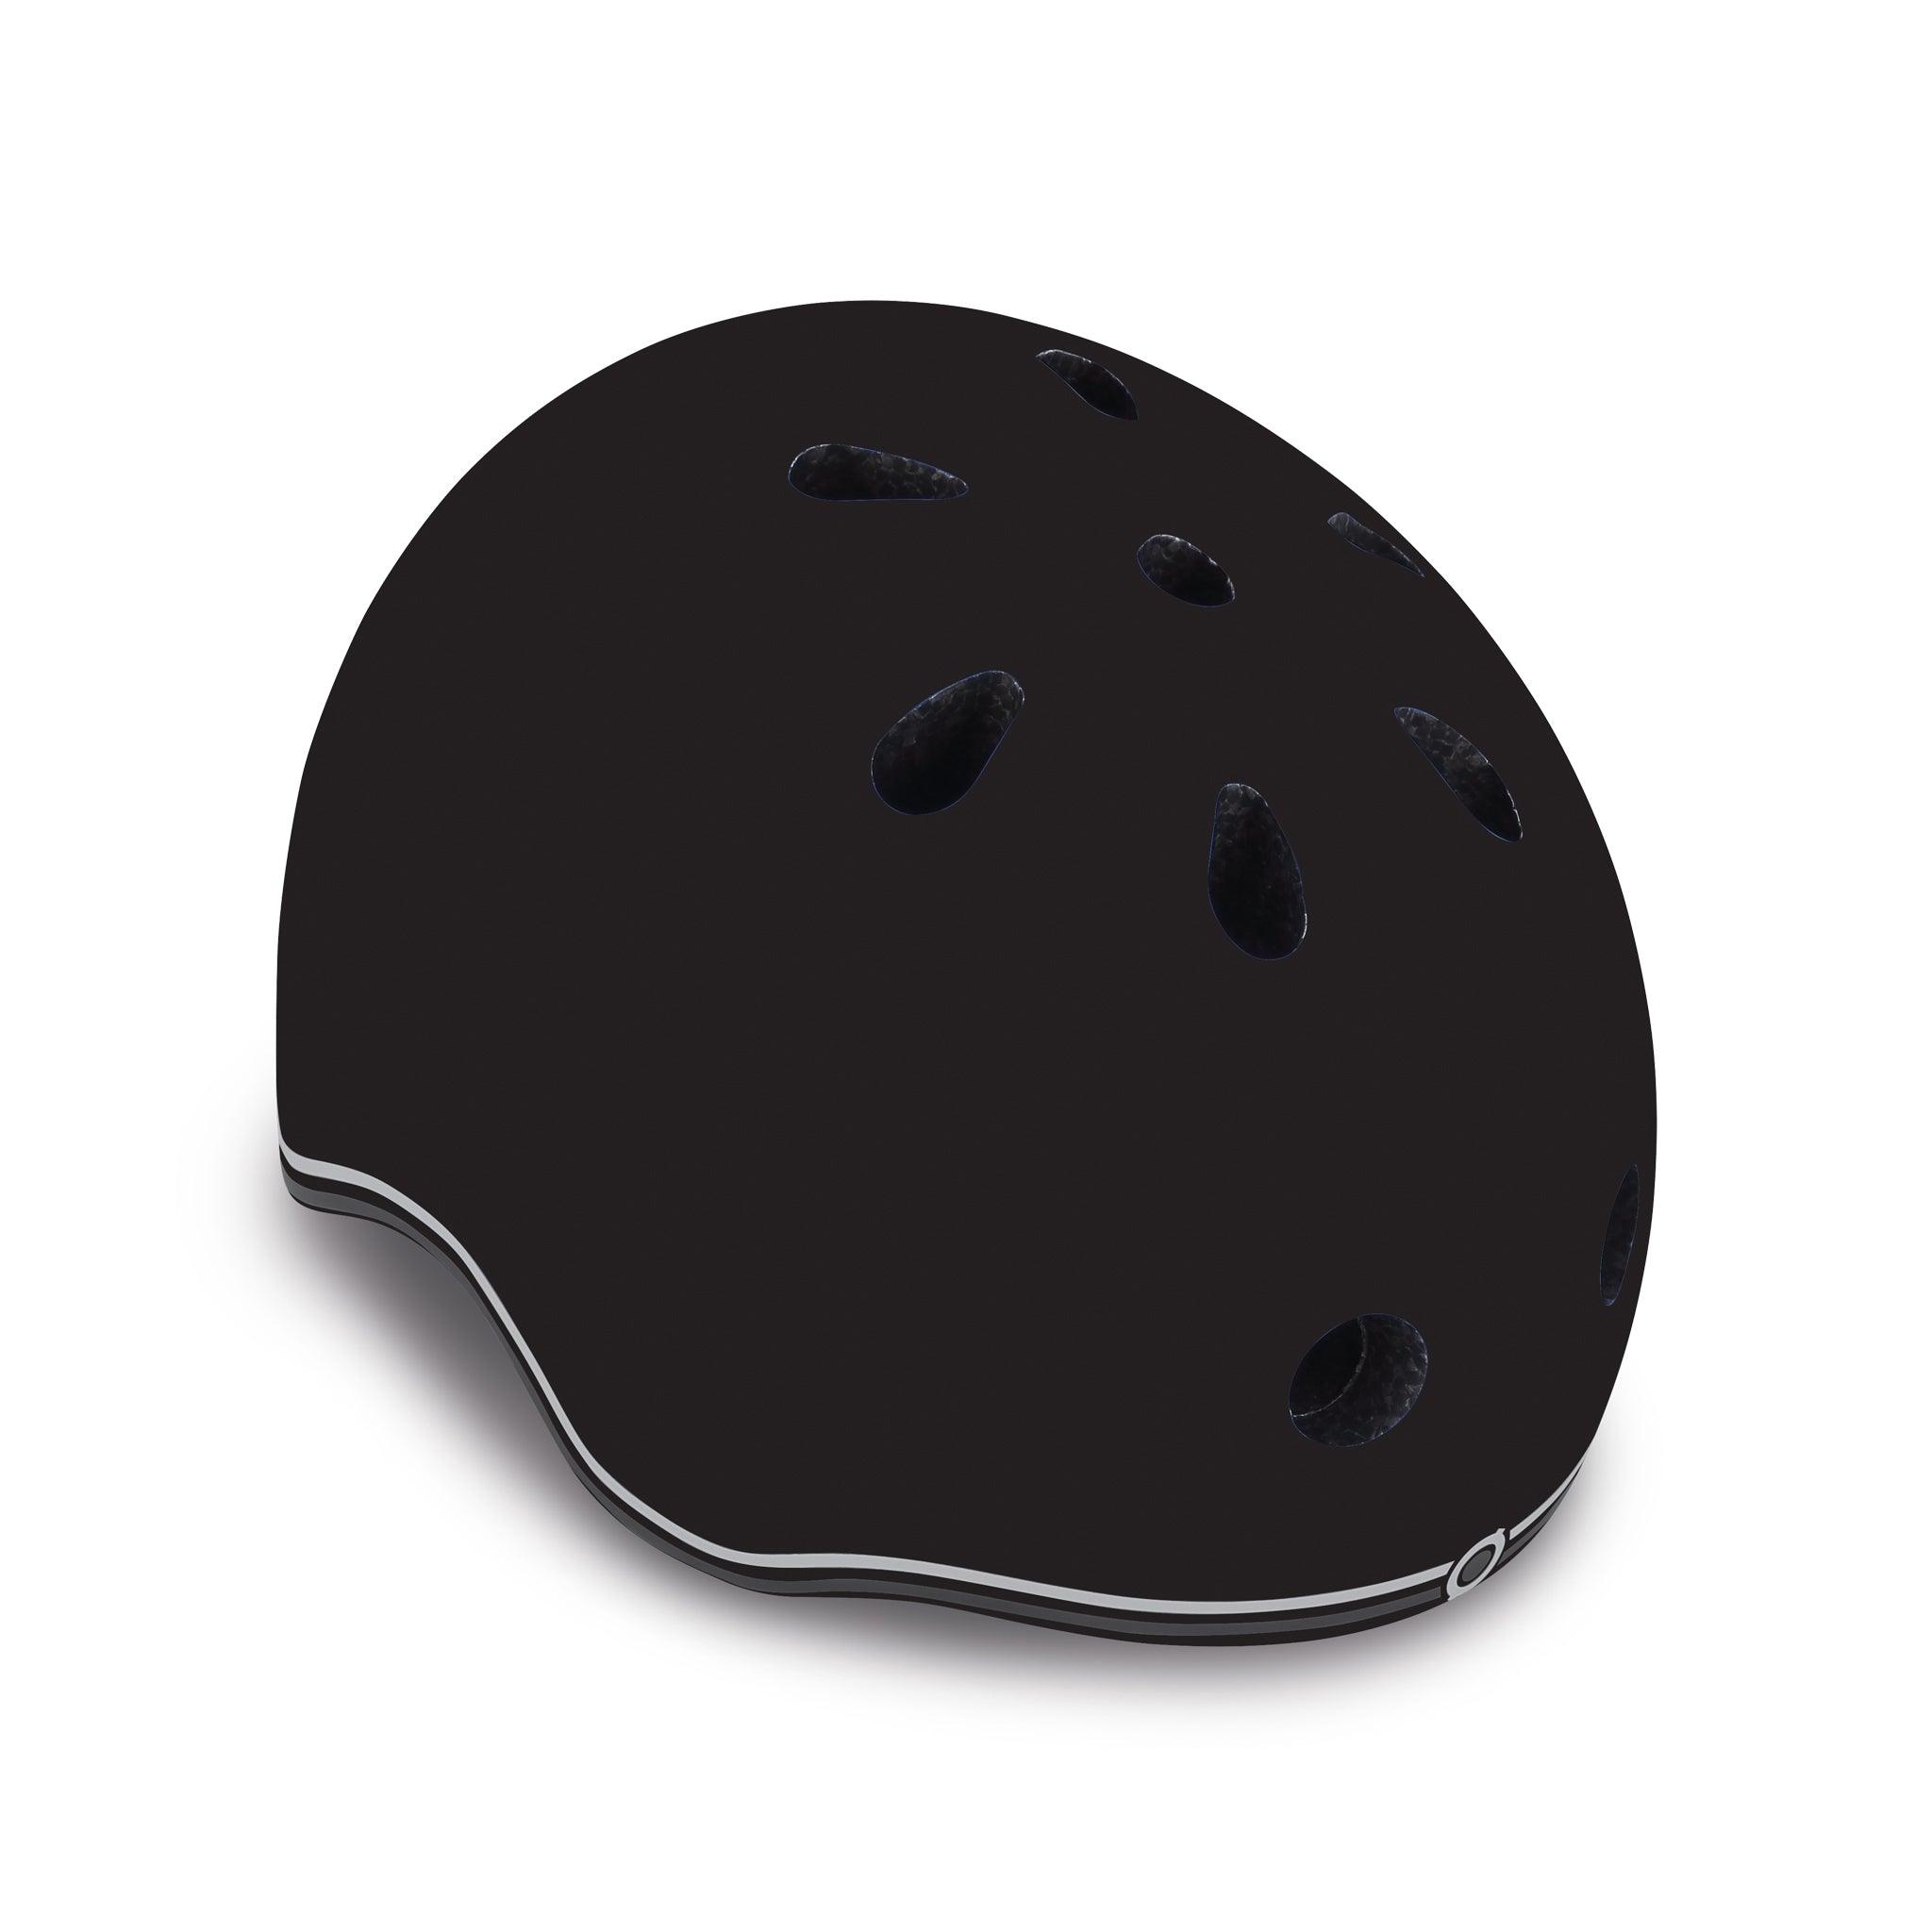 Globber Helmet Primo Lights - Black - Karout Online -Karout Online Shopping In lebanon - Karout Express Delivery 